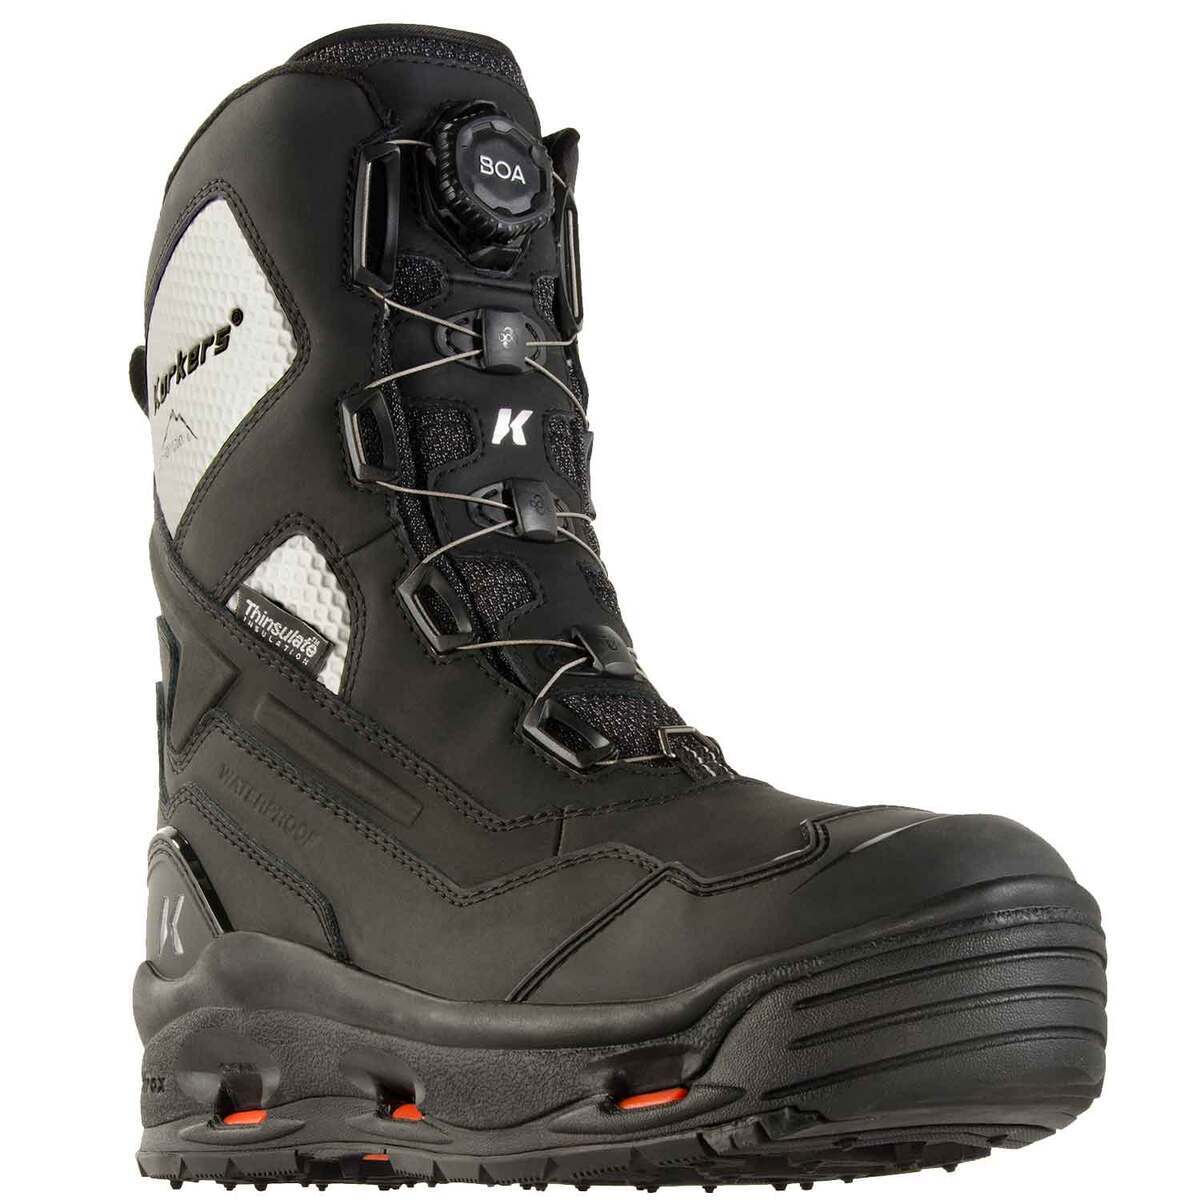 https://www.sportsmans.com/medias/korkers-mens-polar-vortex-1200g-insulated-waterproof-winter-boots-black-size-8-1734875-1.jpg?context=bWFzdGVyfGltYWdlc3w5NjcxNXxpbWFnZS9qcGVnfGFHVXdMMmhsWXk4eE1EVXdPVEUzT0RFME1qYzFNQzh4TnpNME9EYzFMVEZmWW1GelpTMWpiMjUyWlhKemFXOXVSbTl5YldGMFh6RXlNREF0WTI5dWRtVnljMmx2YmtadmNtMWhkQXxmYzkyNTNlYTdkMjUyYmRiNTQ3MjJhOWMwZTQ1MGRhMTVhOWQwNTM3MTNkZmRkMTBiY2YxNTk1YzE2YzQ2ODFi